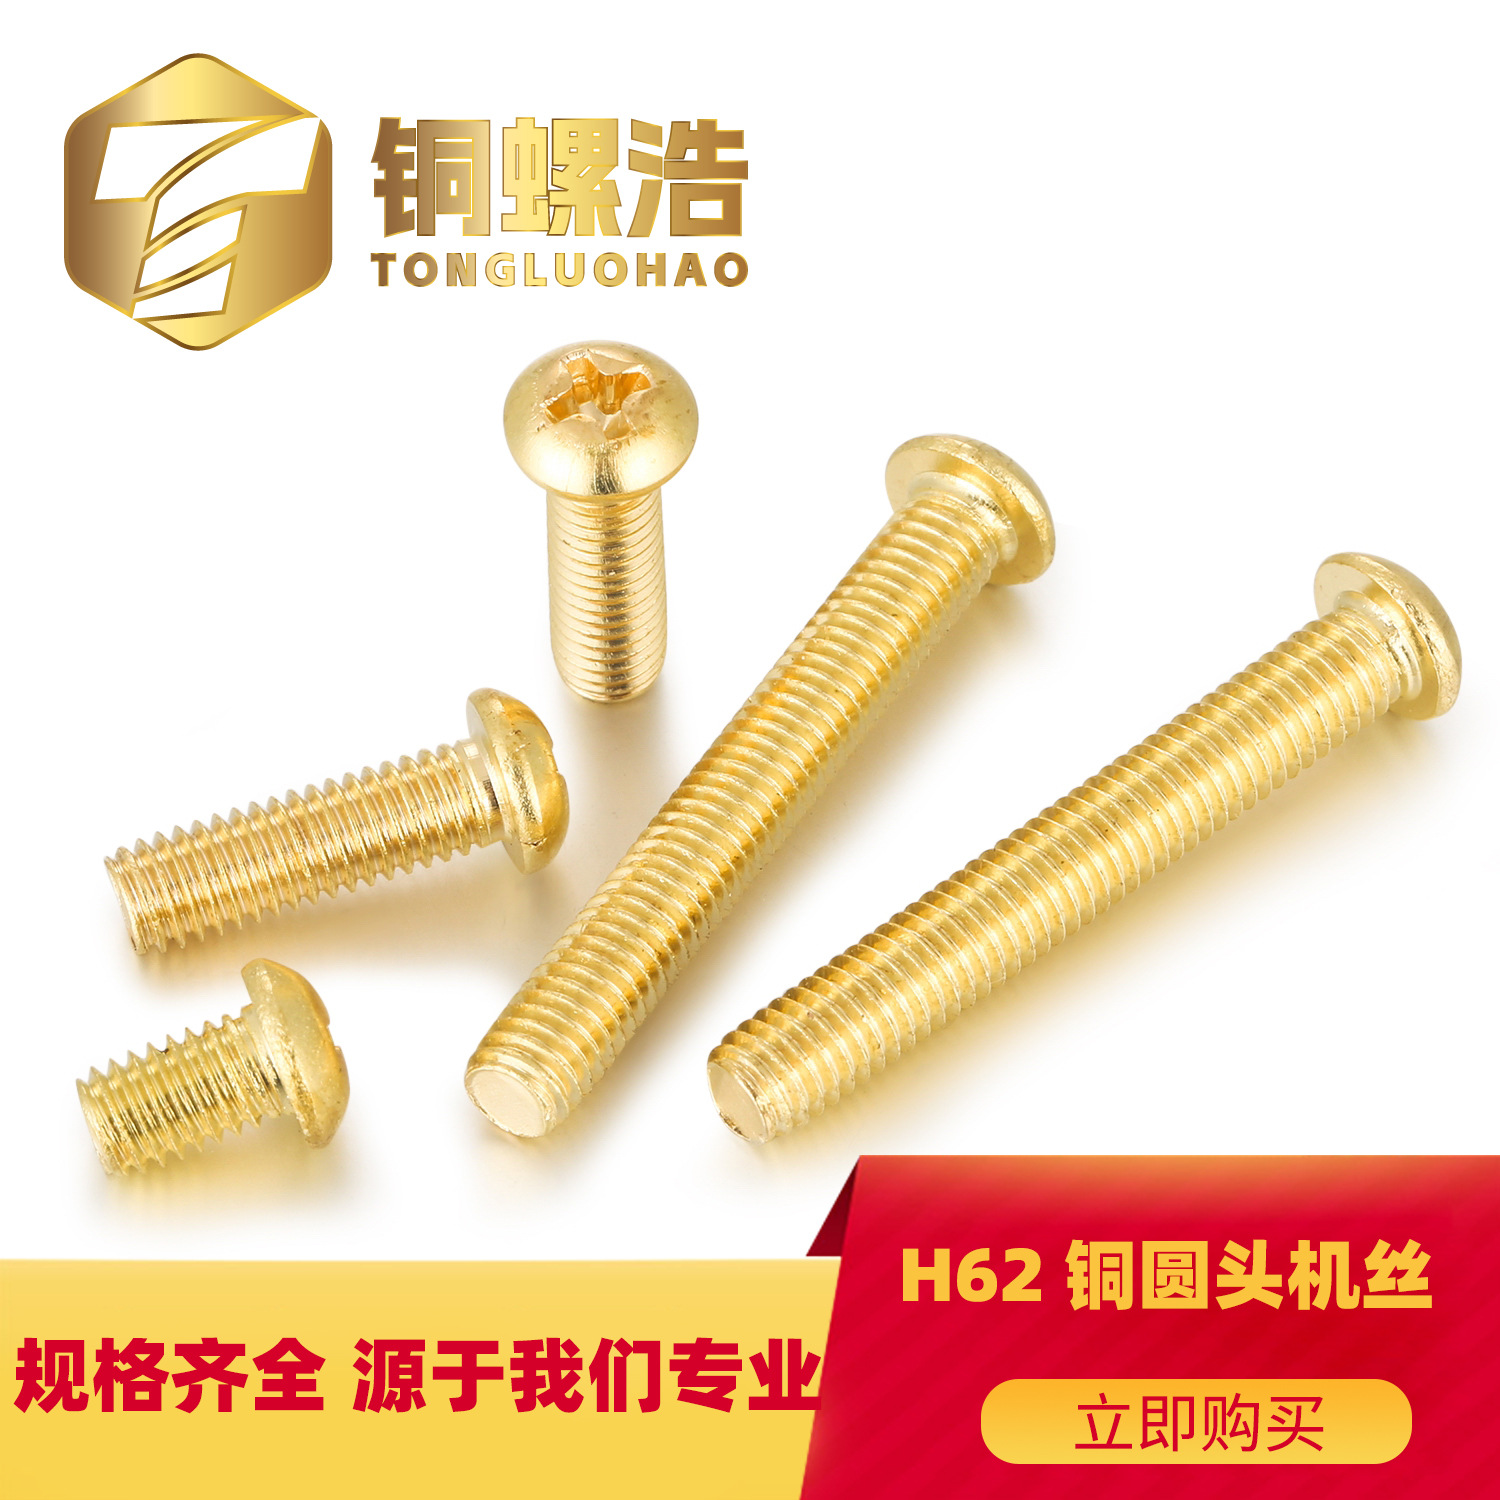 【M5系列】现货H62黄铜GB818小盘头十字机牙螺钉PM铜圆头机螺丝